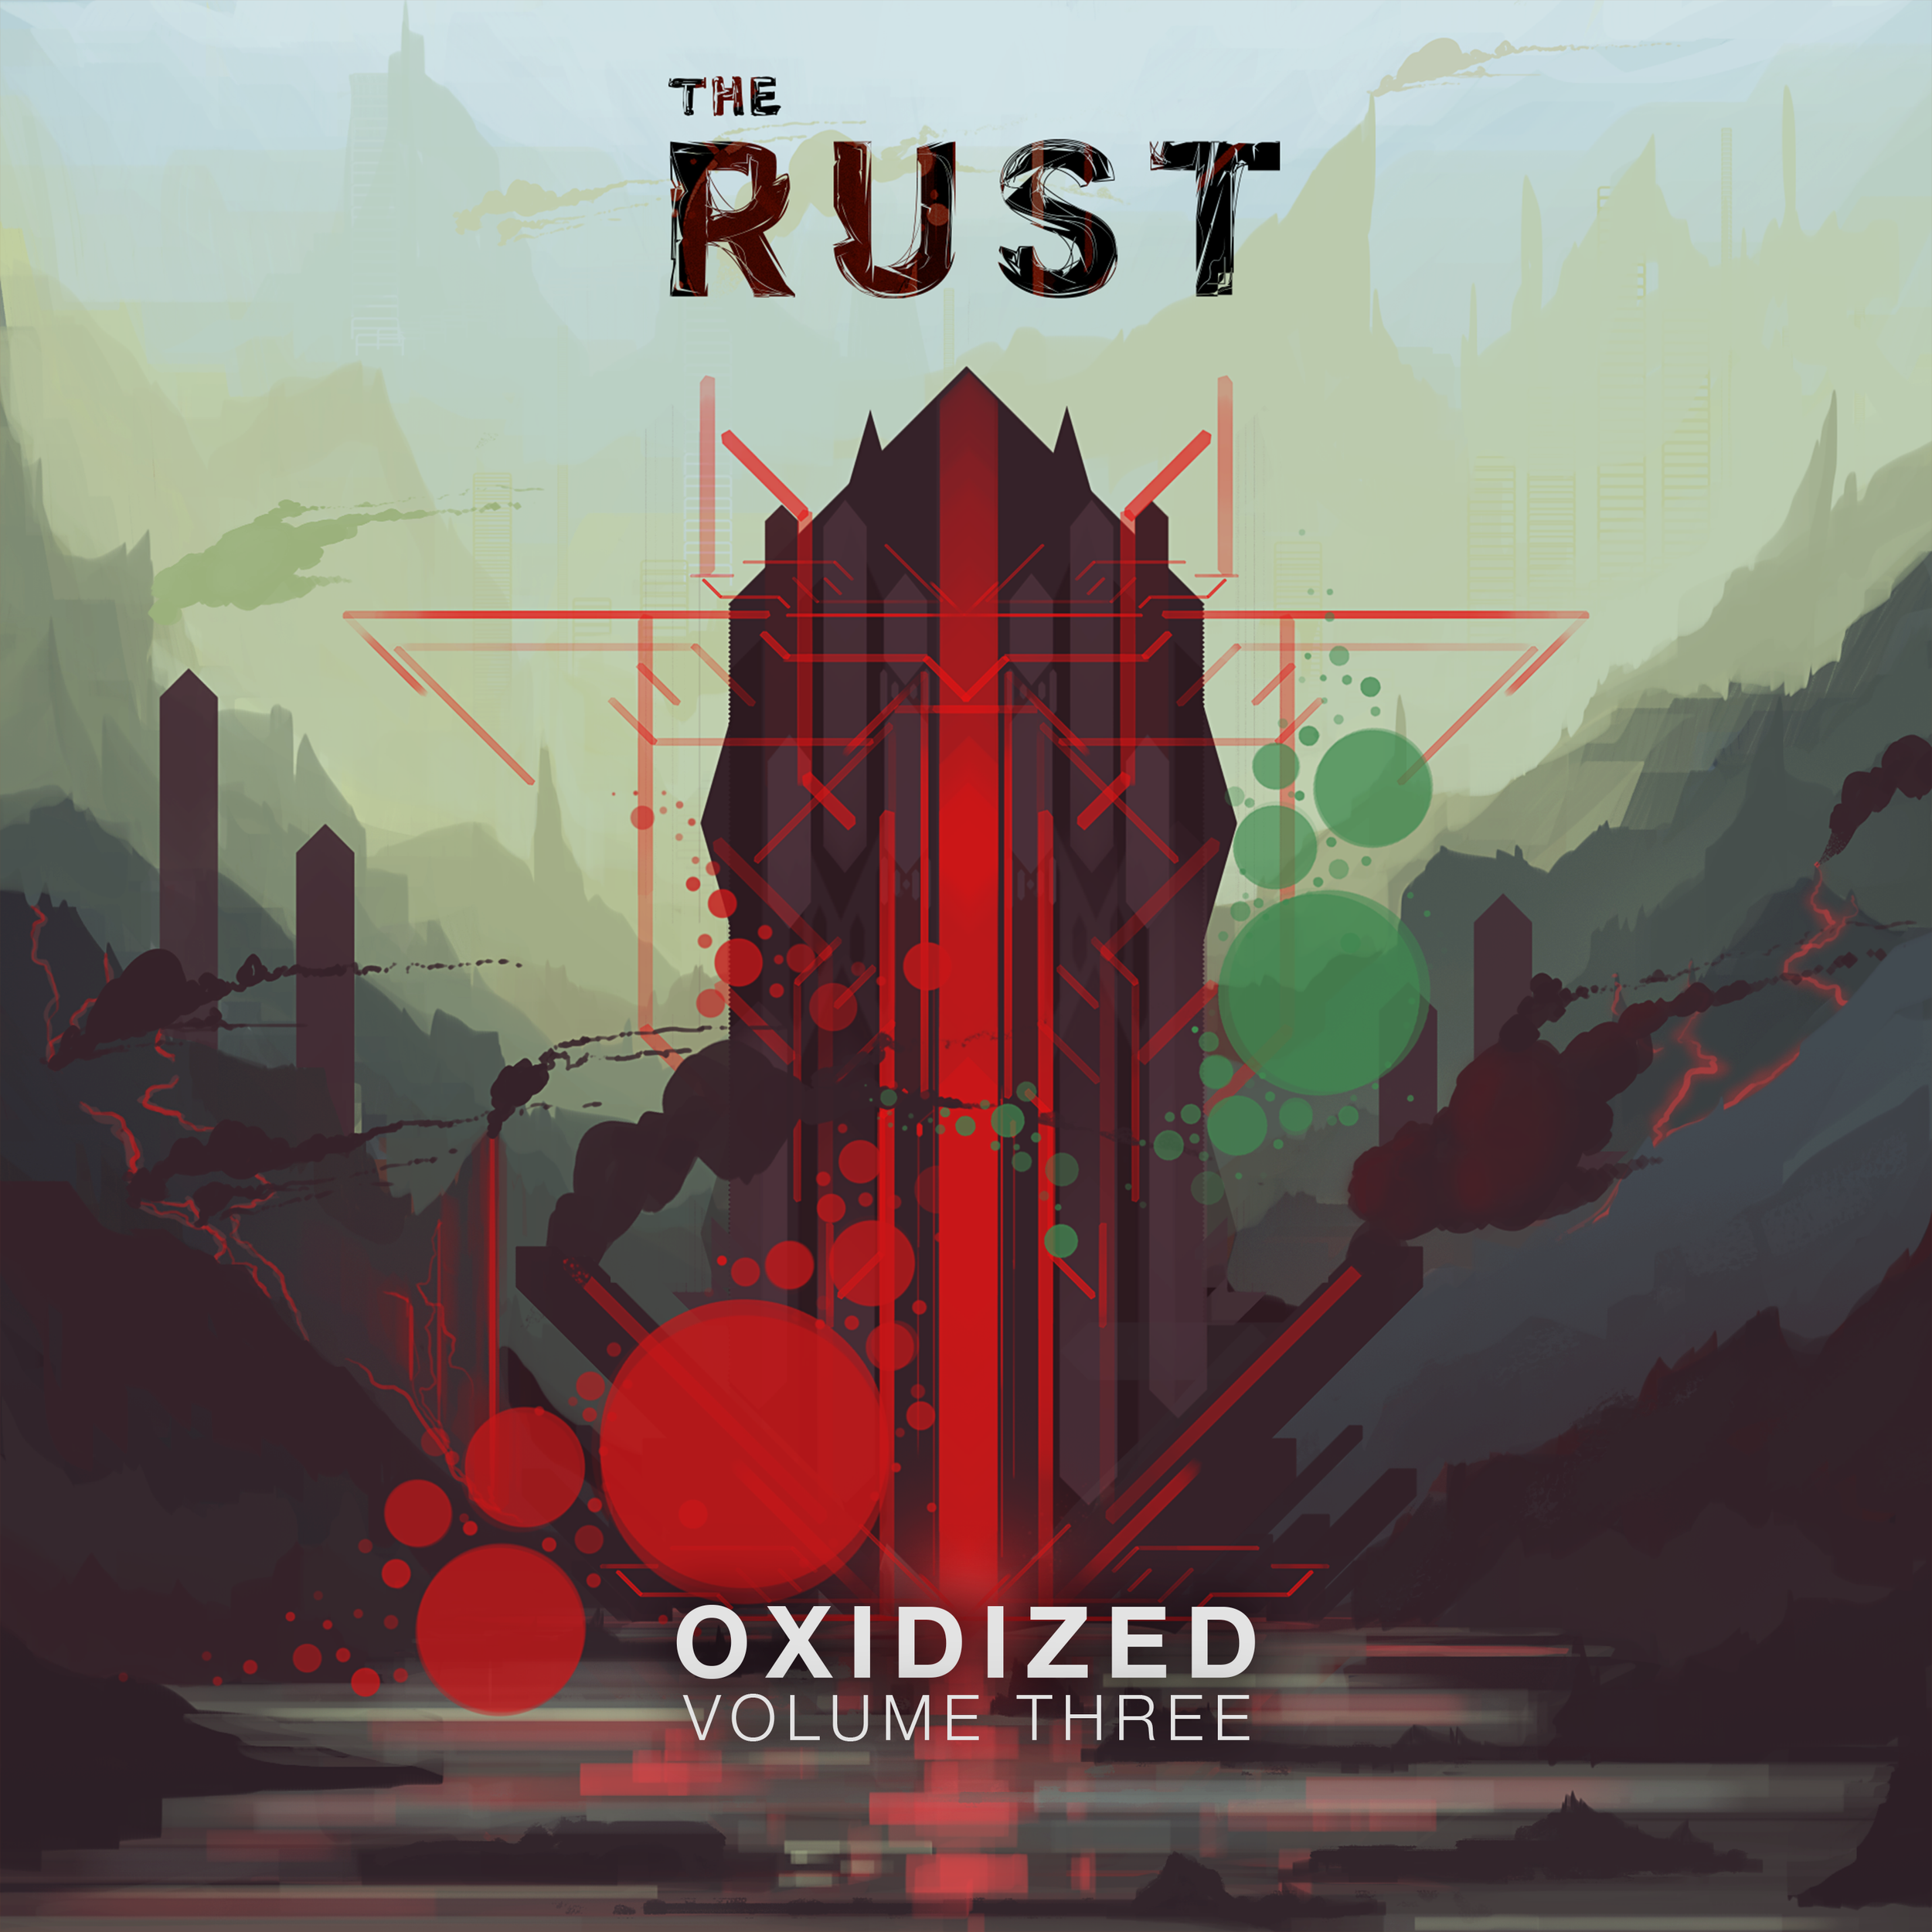 Oxidized, Vol. 3 (The Rust Music)